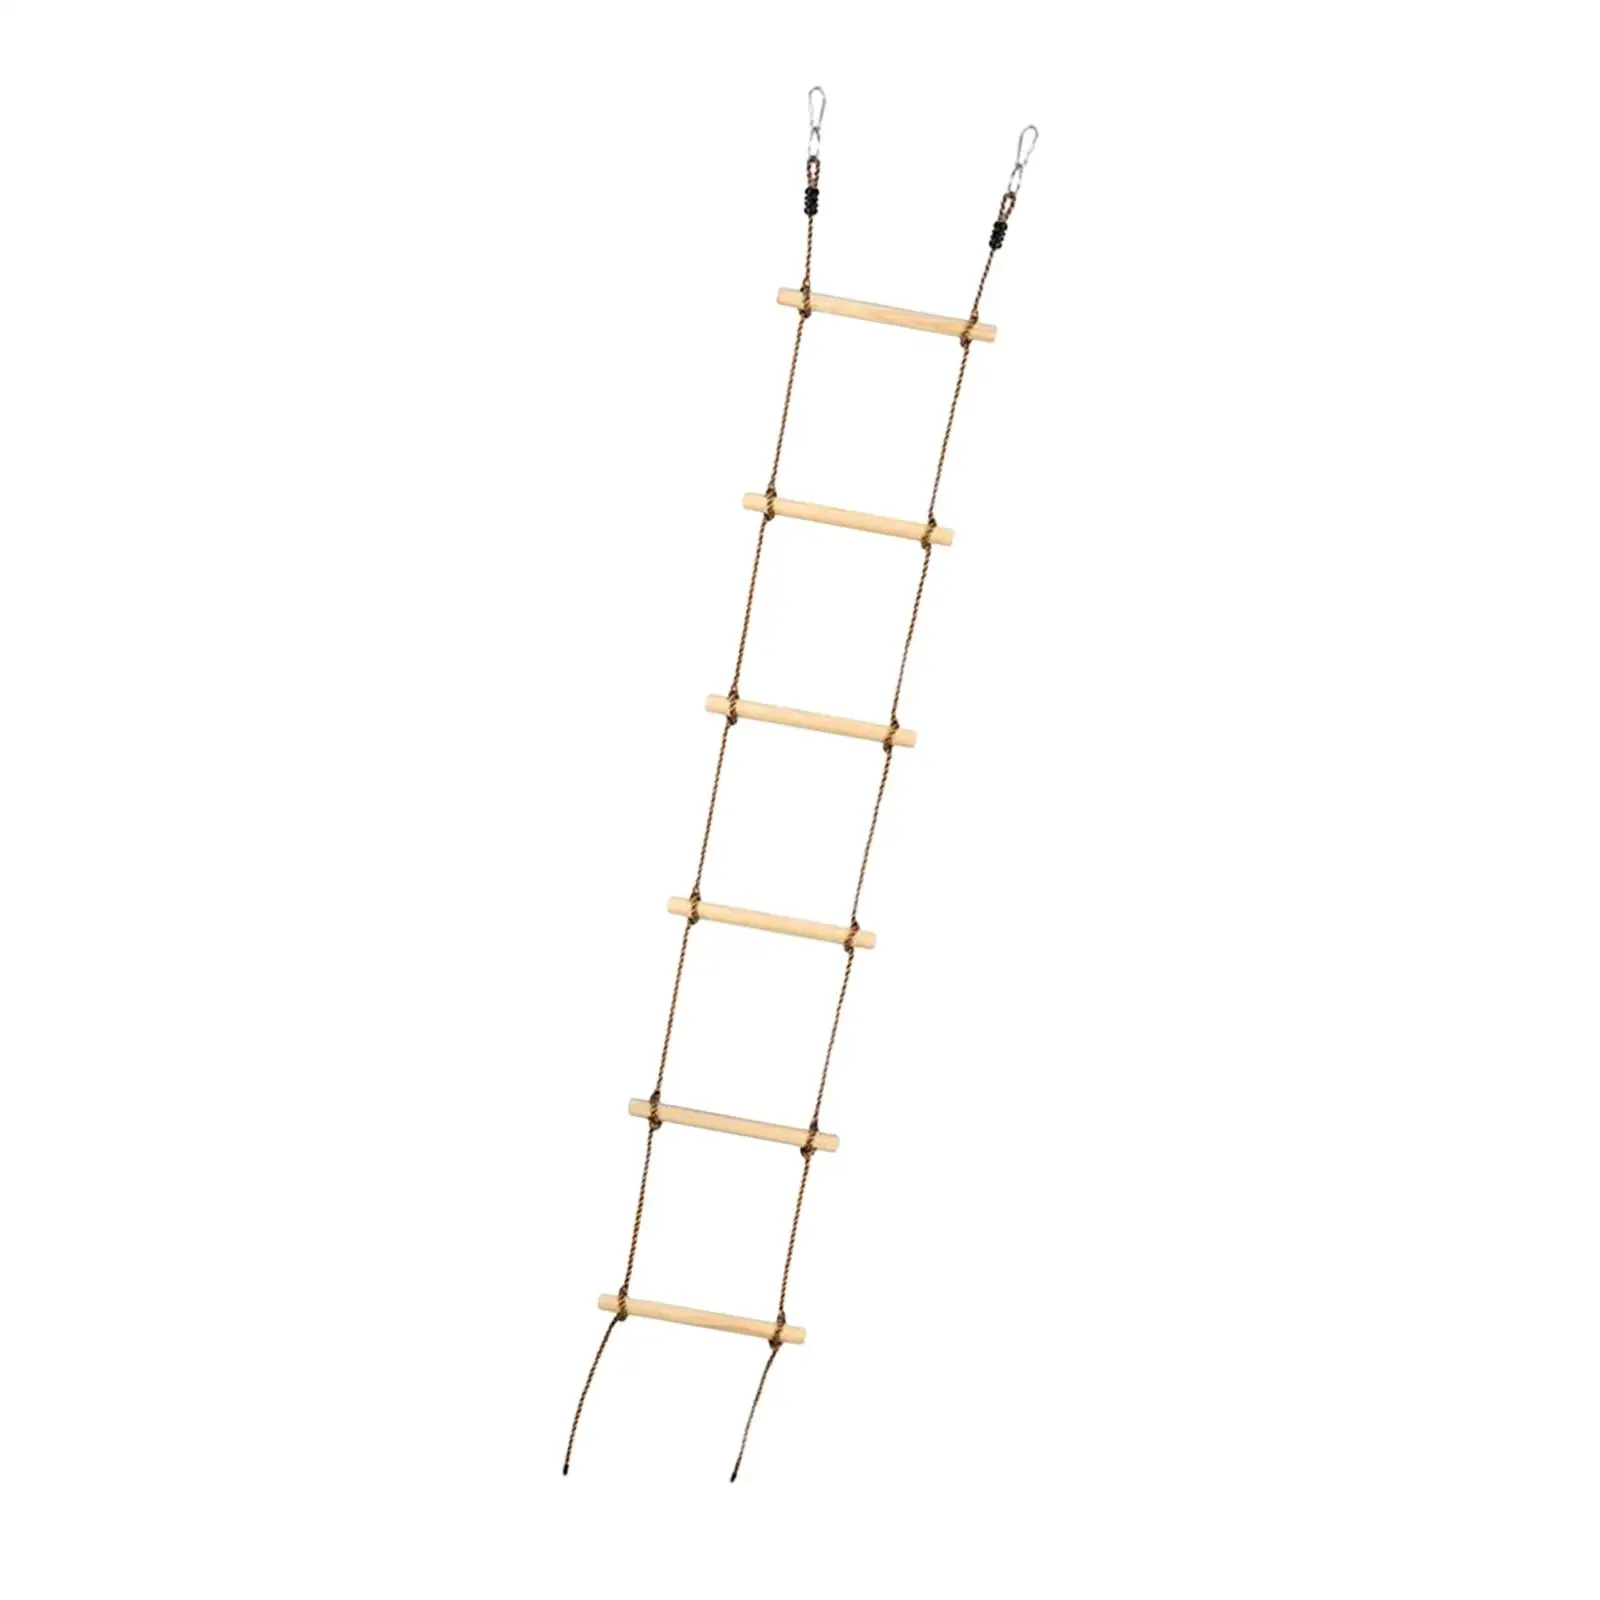 

8.2ft Climbing Rope Ladder for Kids 6 Wooden Rungs Climbing Ladder Hanging Rope Ladder for Park Treehouse DIY Swingset Backyard